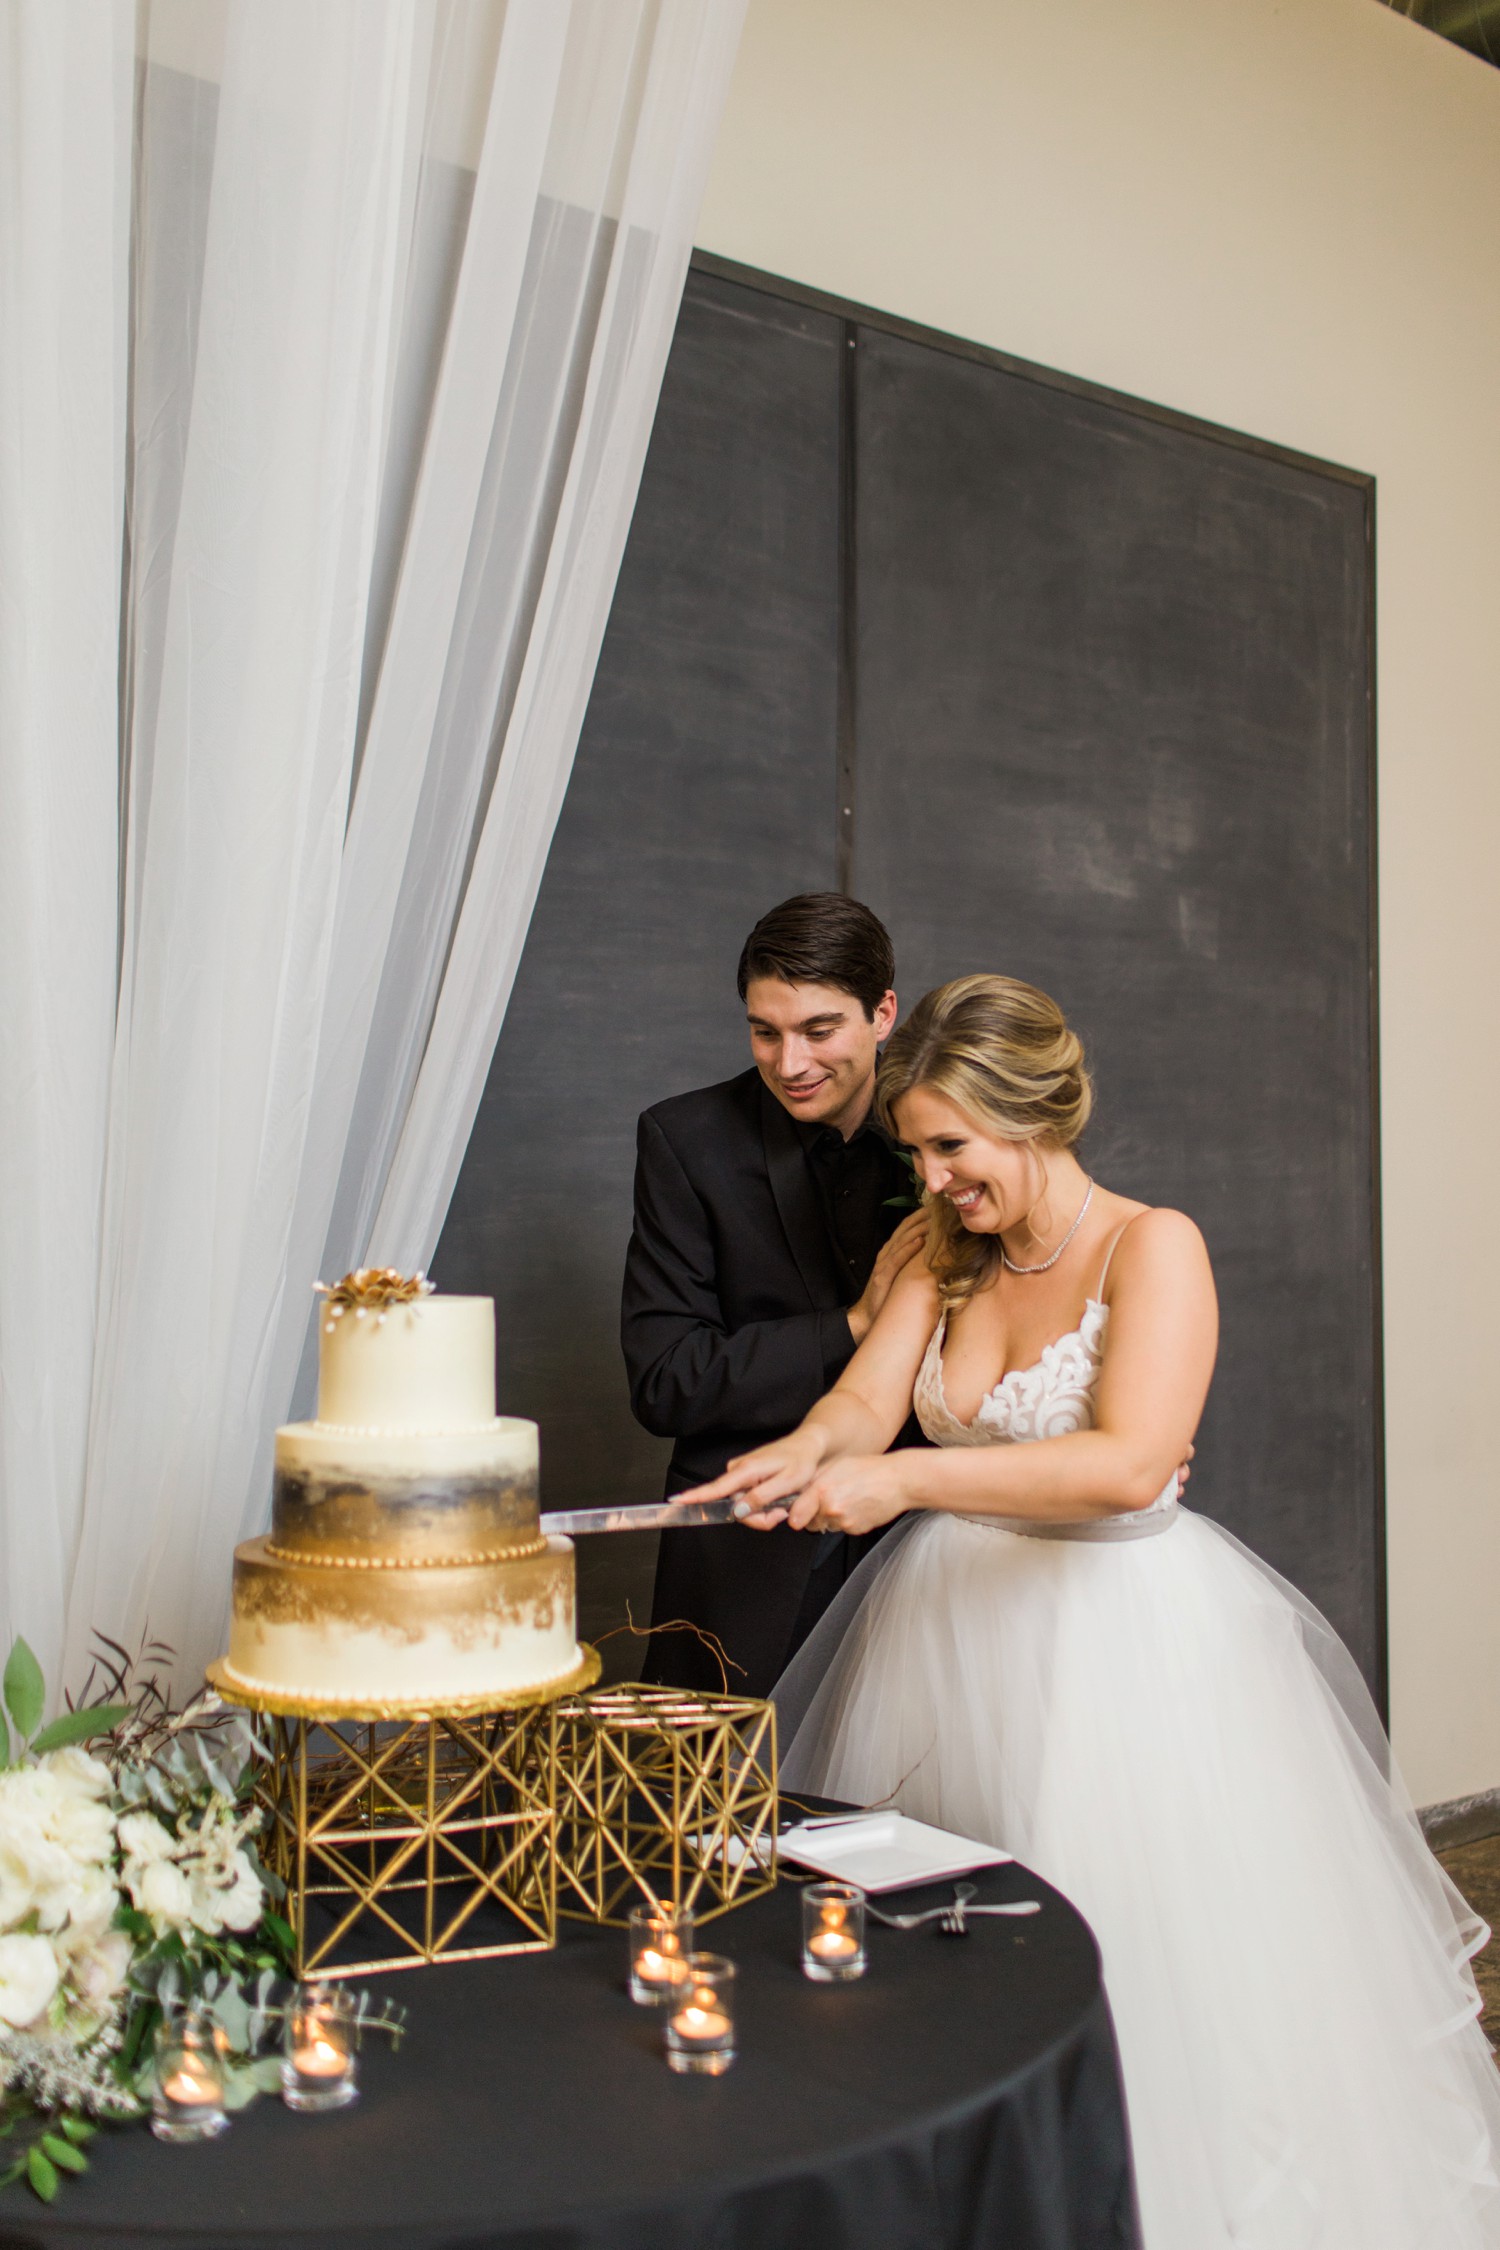 Stave Room Wedding Cake